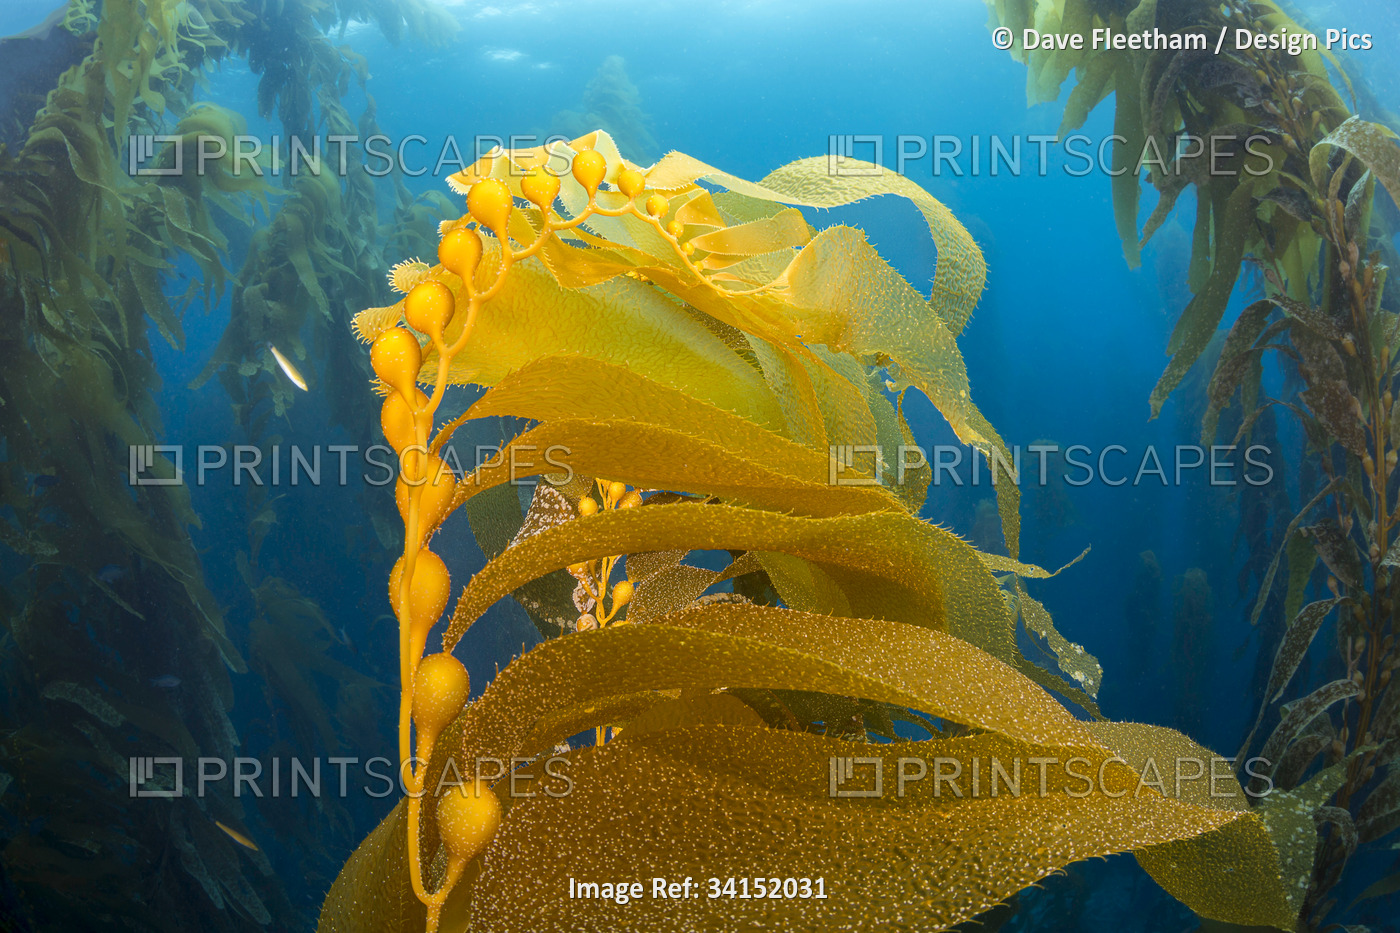 Air bladders lift strands of Giant kelp (Macrocystis pyrifera) toward the ...